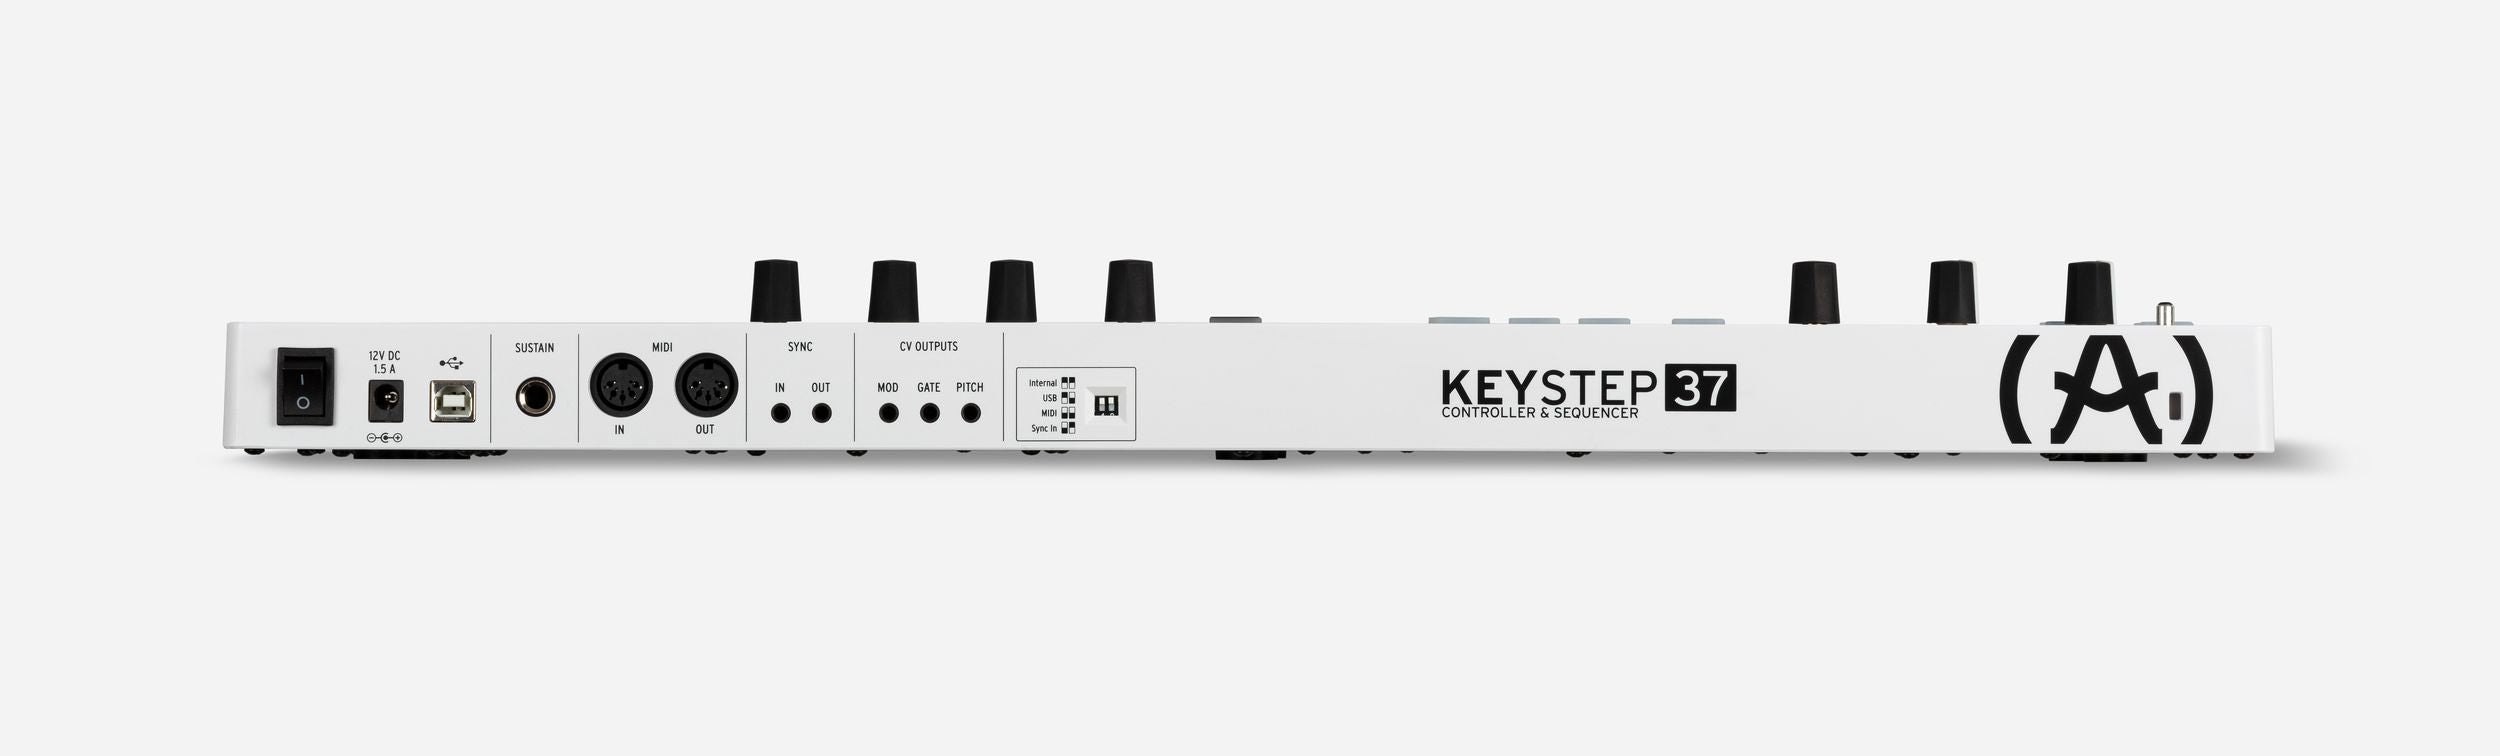 Arturia 37-Key MIDI Keyboard Controller And Sequencer KEYSTEP37